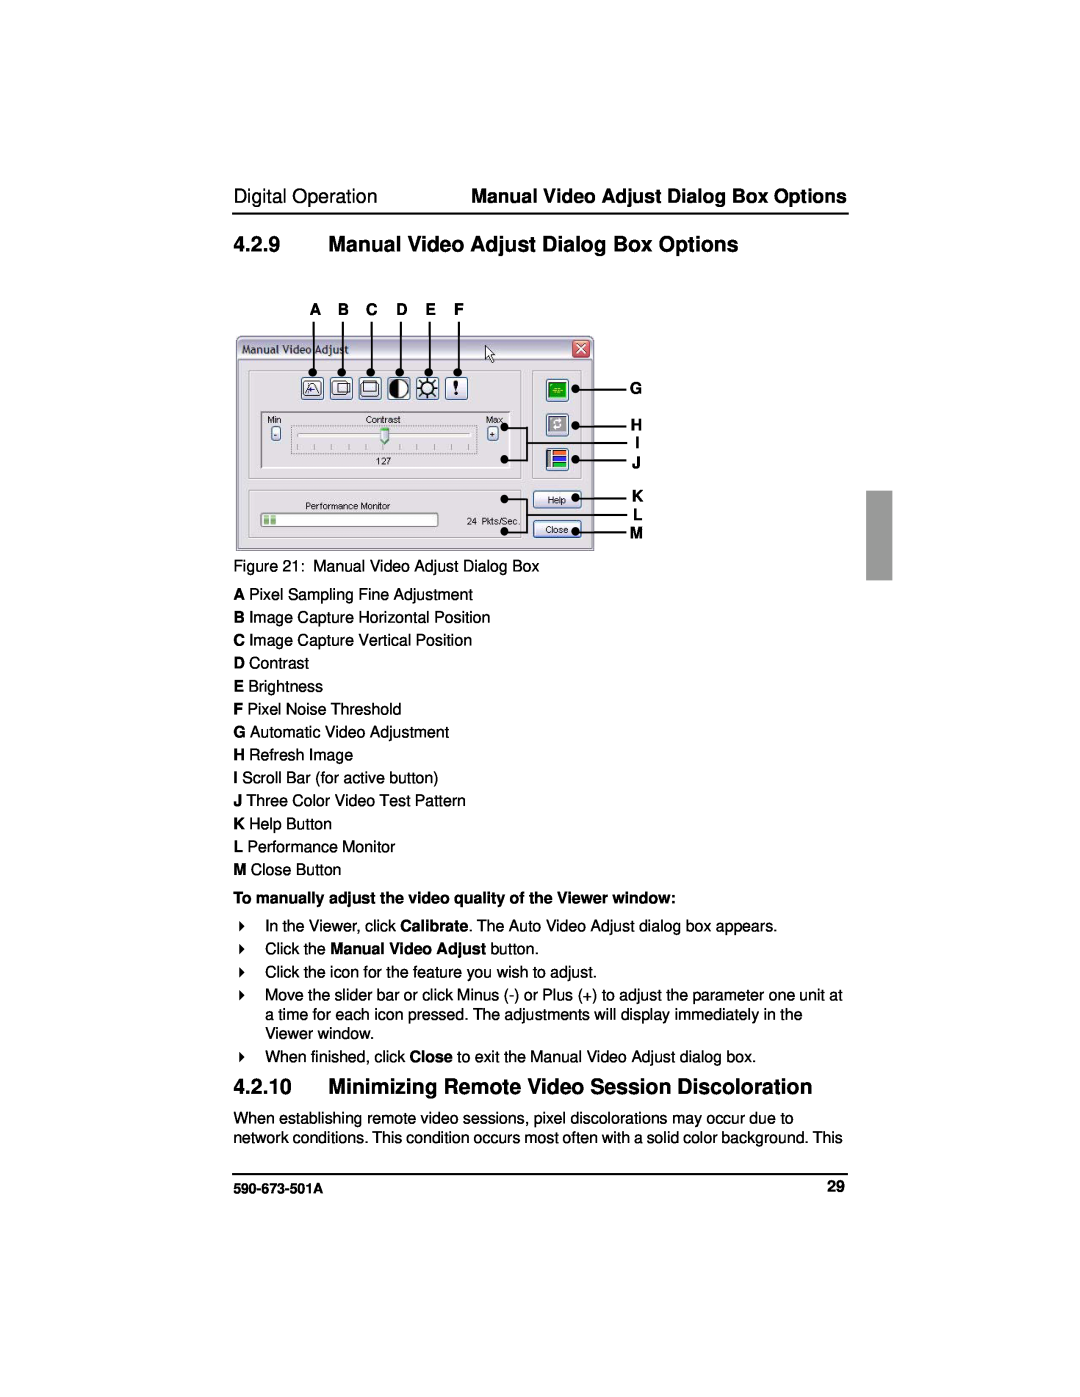 Fujitsu Siemens Computers BX600 Manual Video Adjust Dialog Box Options, Minimizing Remote Video Session Discoloration 